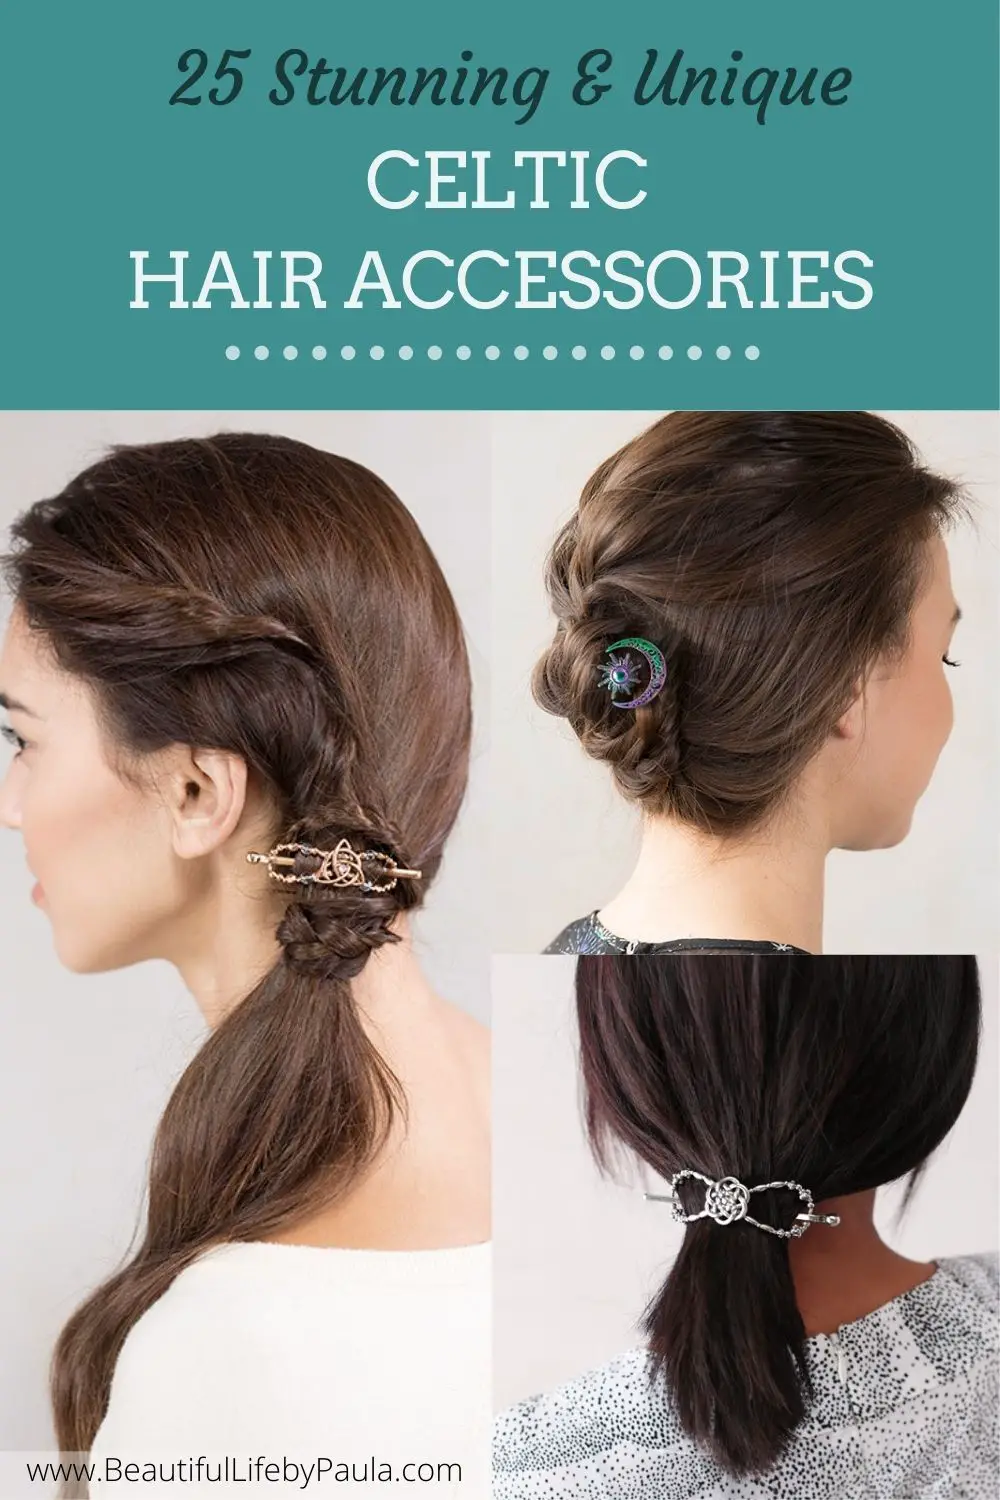 Celtic hair accessories